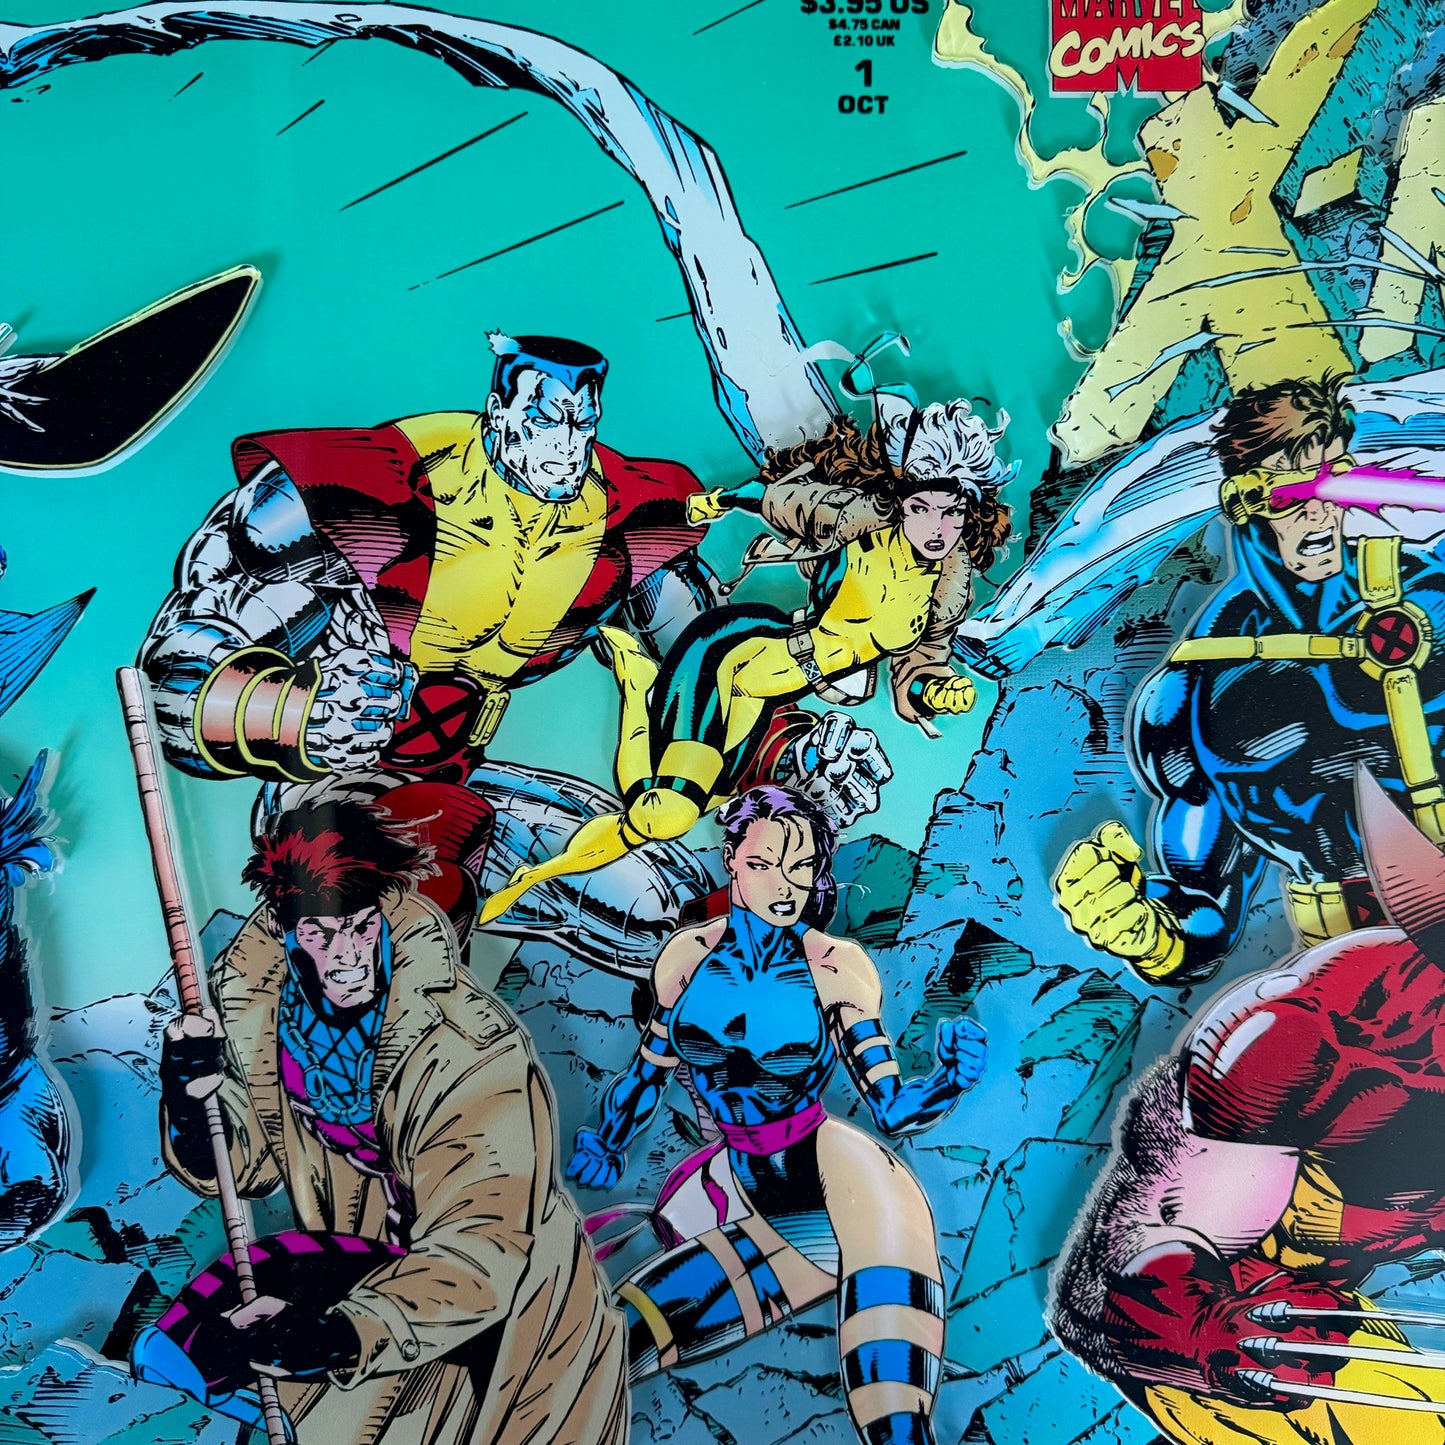 Jim Lee "X-Men #1" Multi-Layer Acrylic Panel